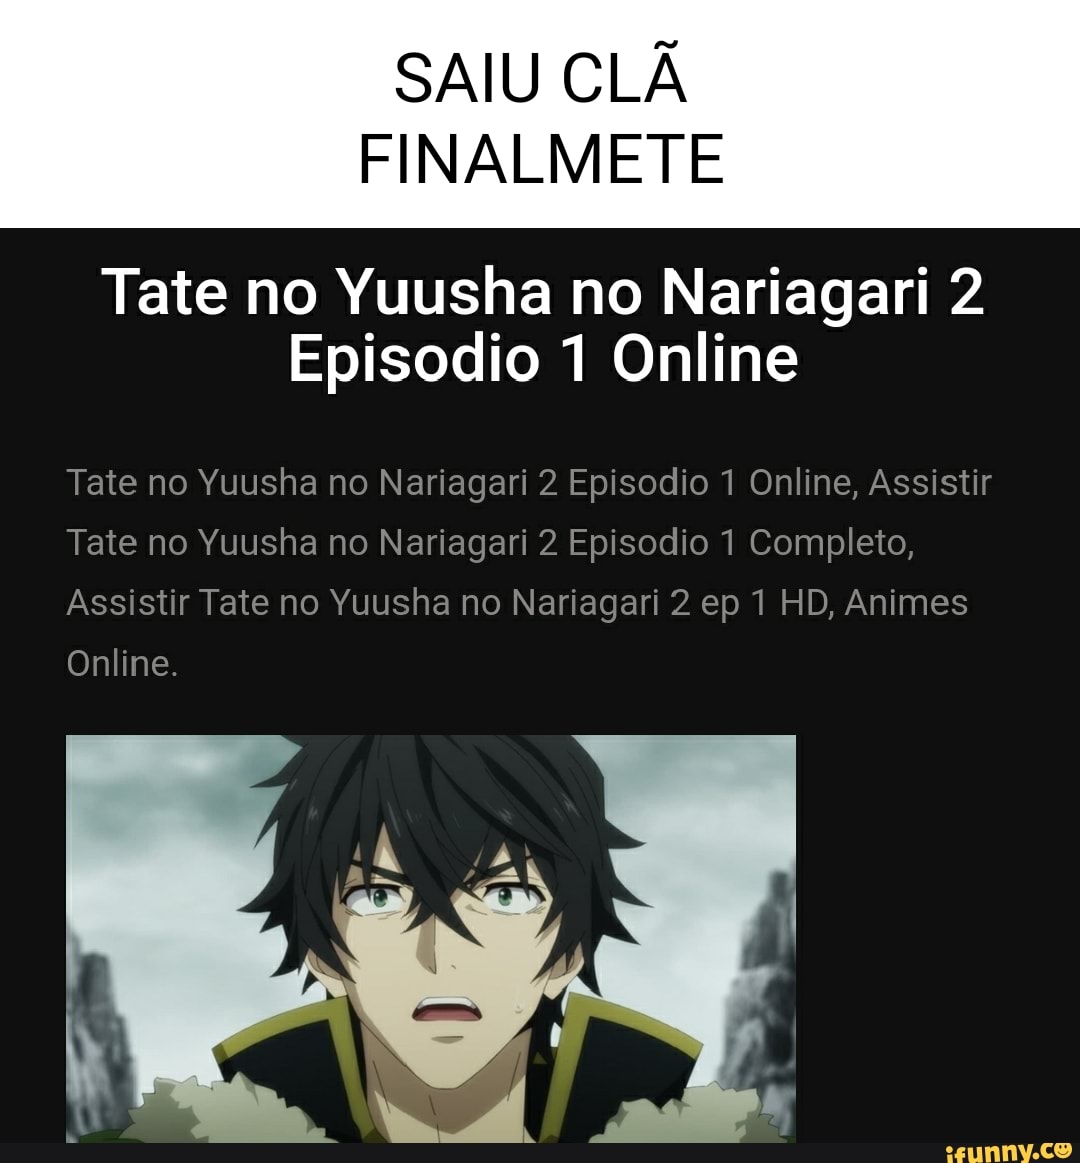 Assistir Tate no Yuusha no Nariagari 3 Todos os episódios online.